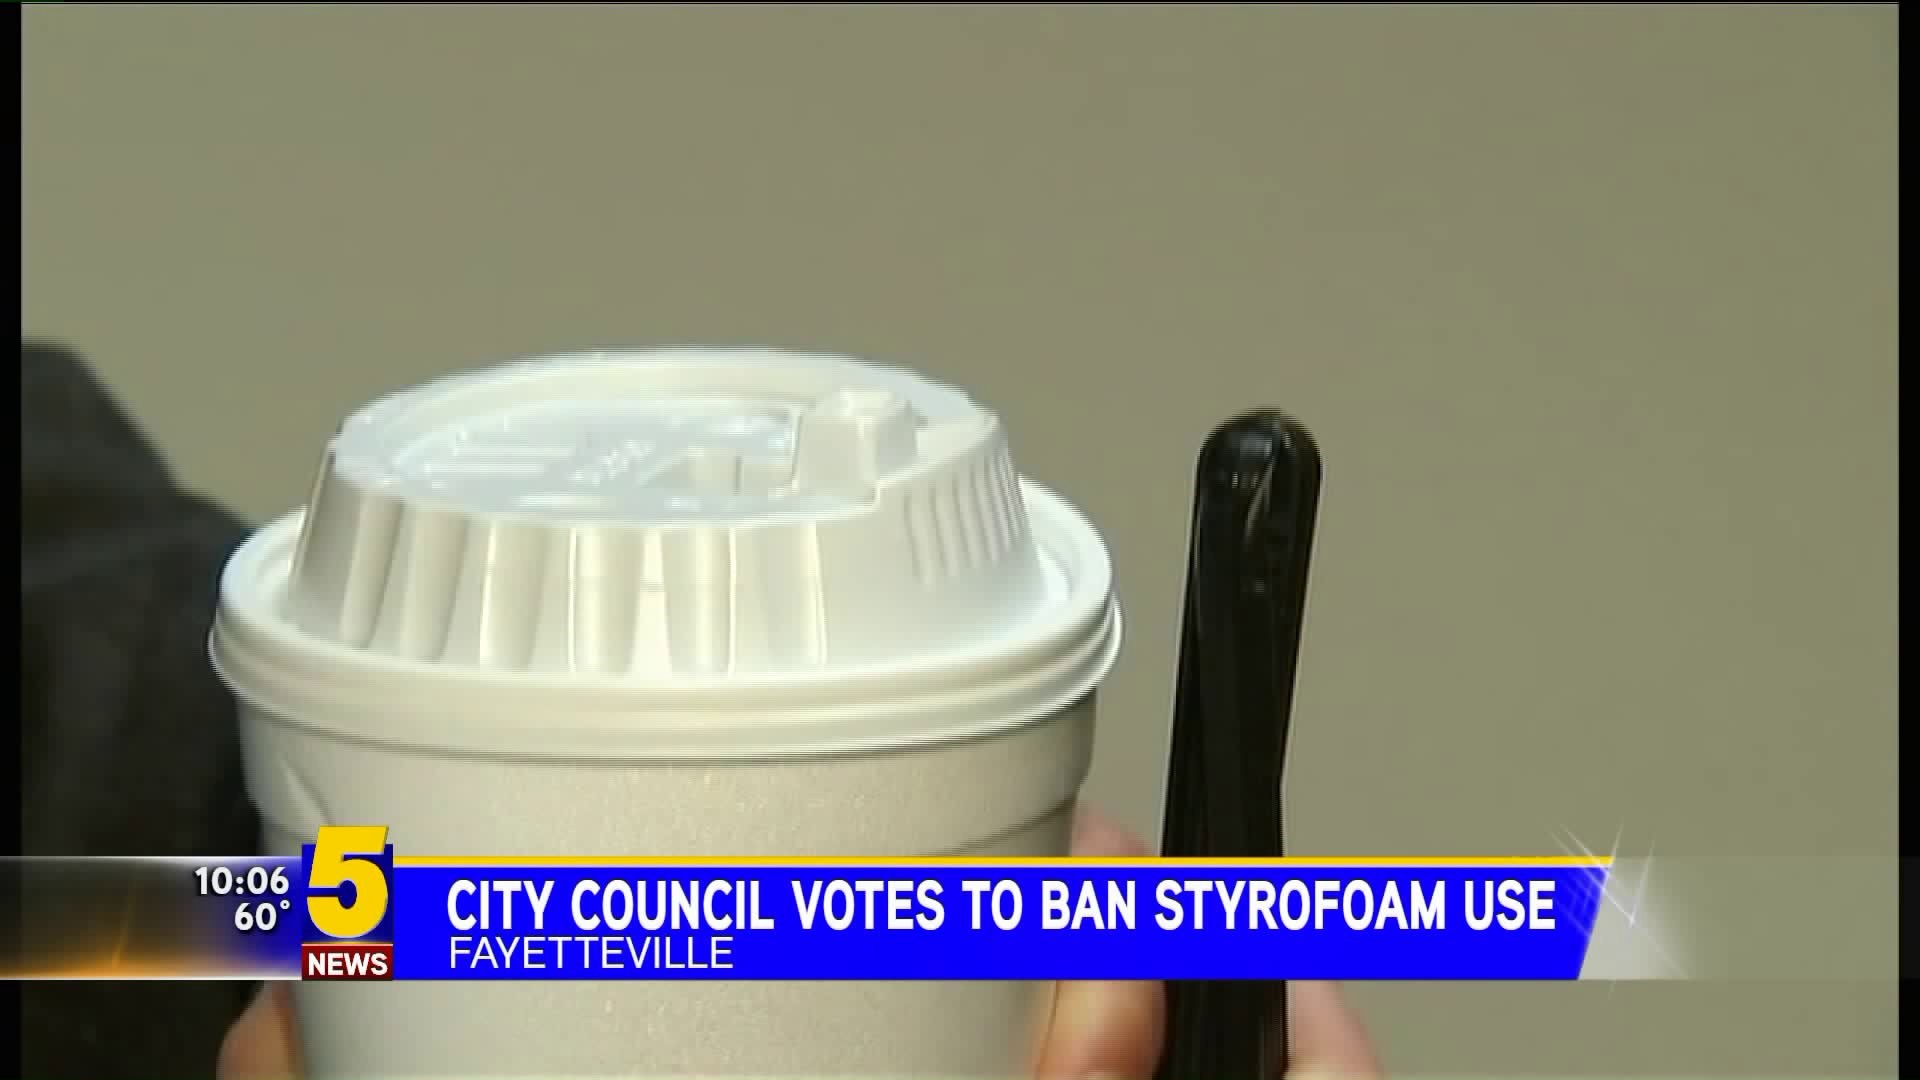 Fayetteville City Council Votes to Ban Styrofoam